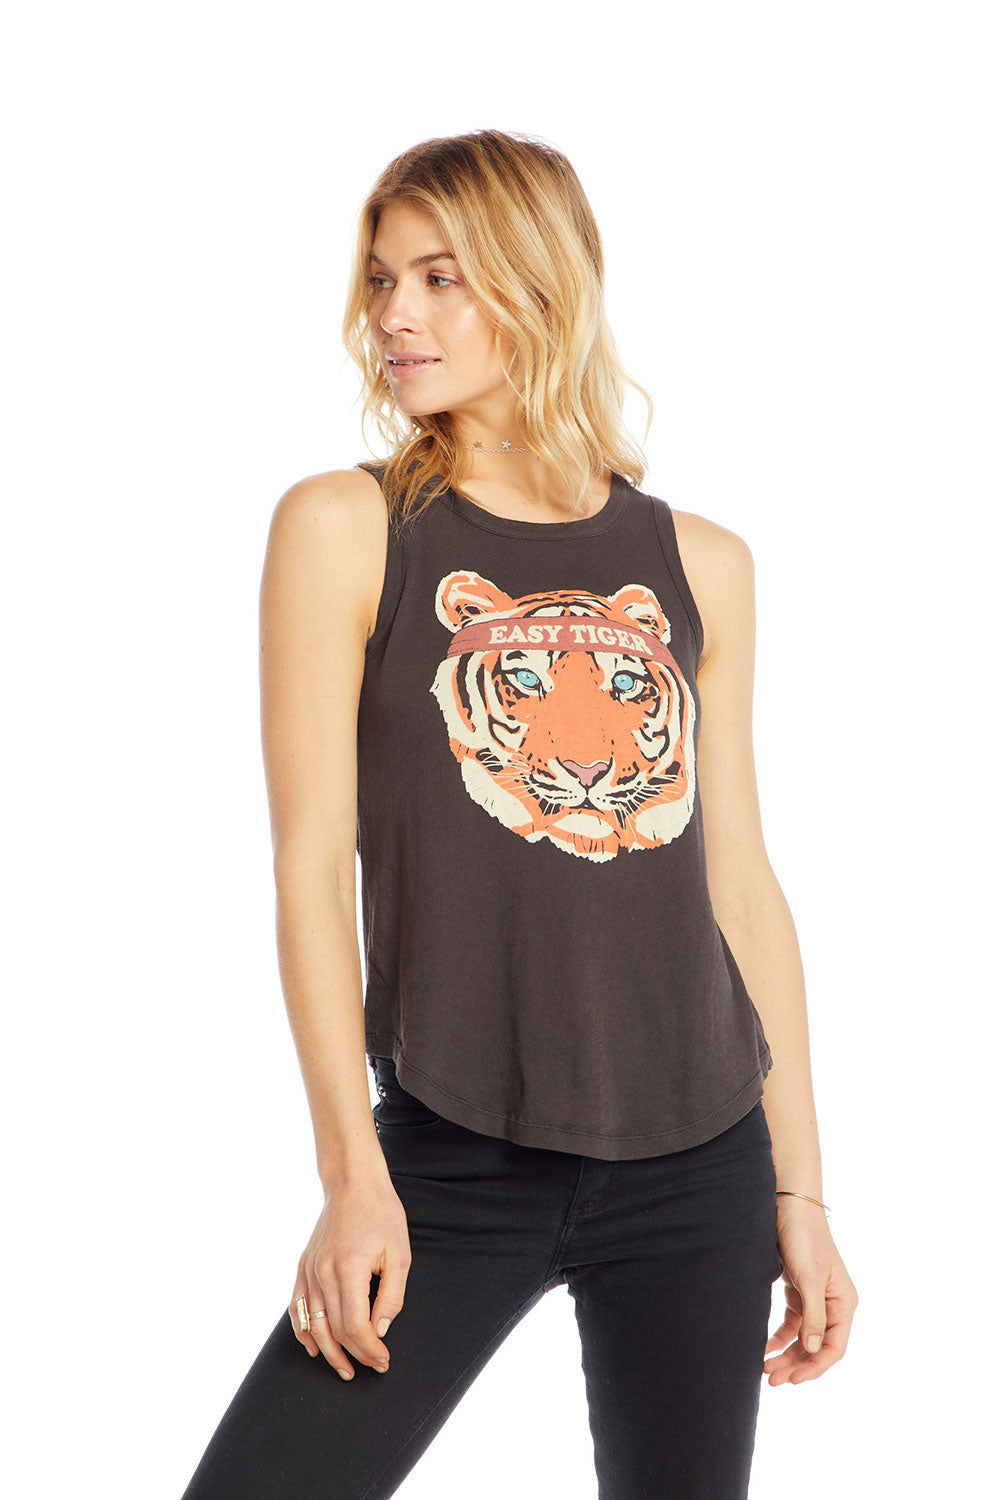 easy tiger shirt